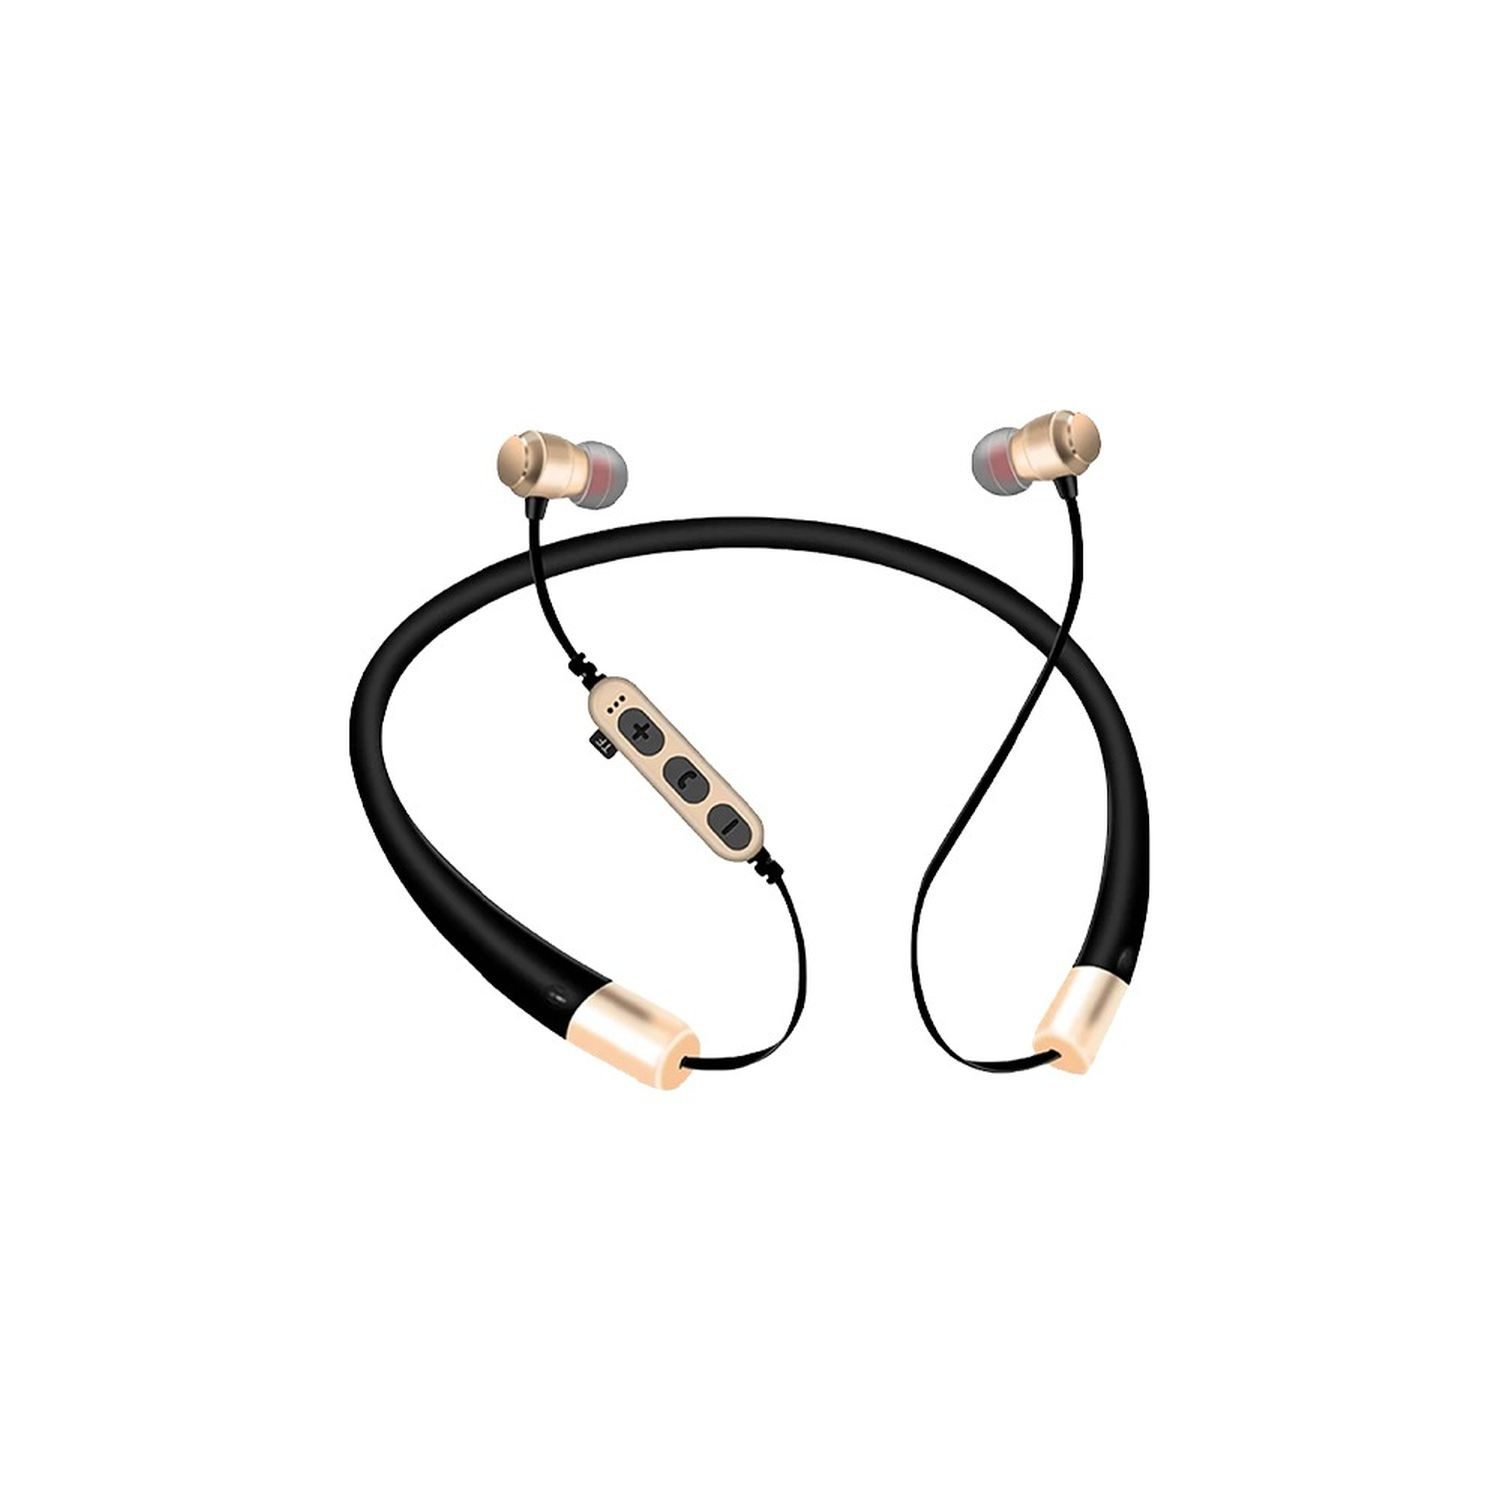 Bluetooth SUNIX Schwarz-Grau In-ear BLT-21, Kopfhörer